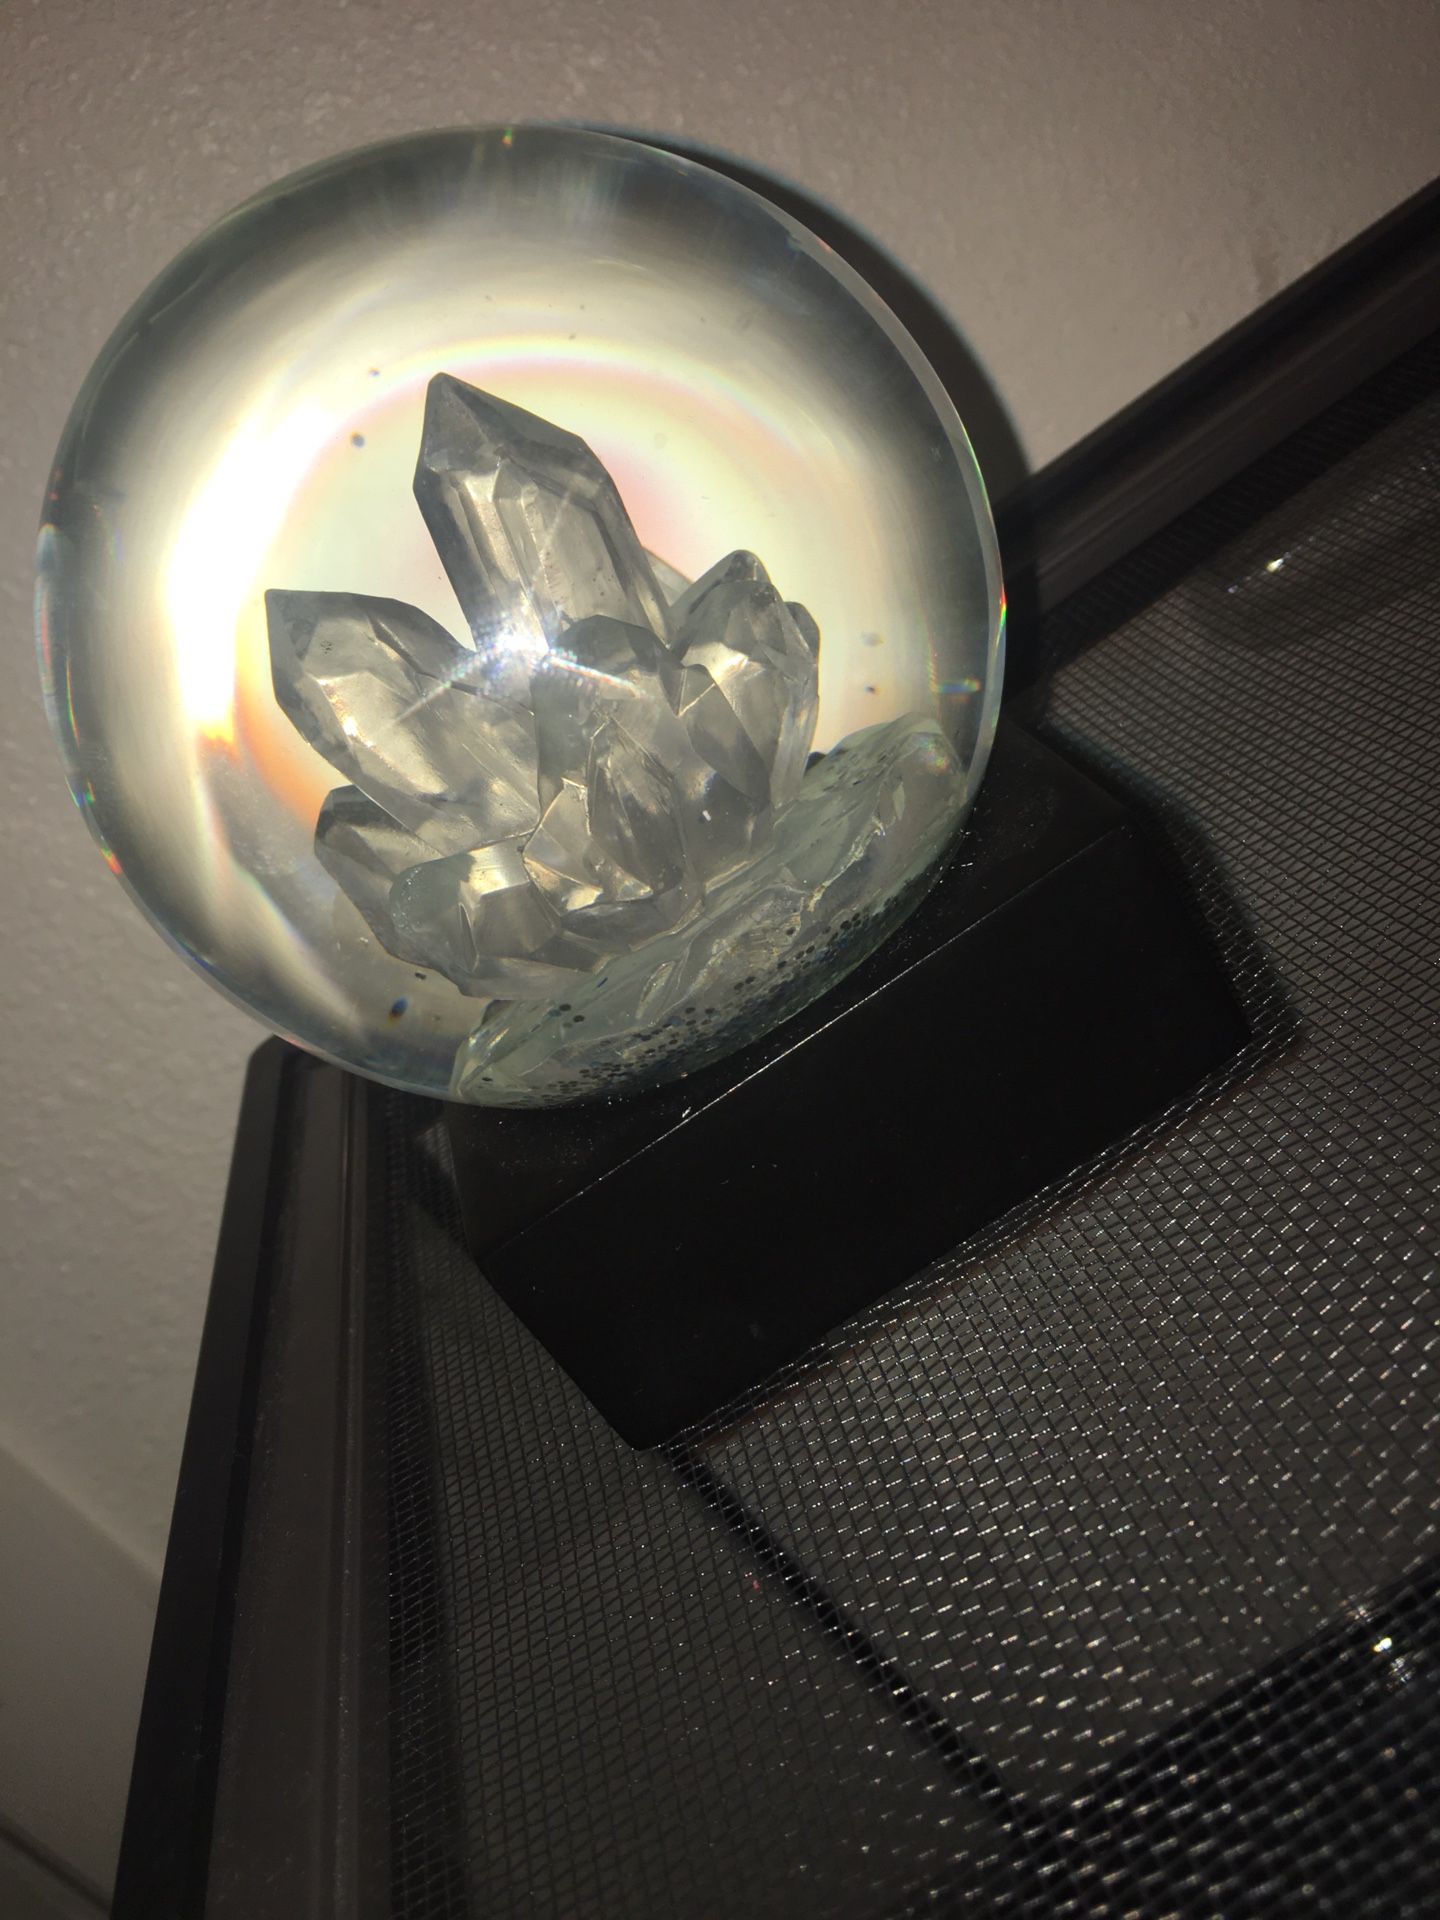 Crystal Snow Globe